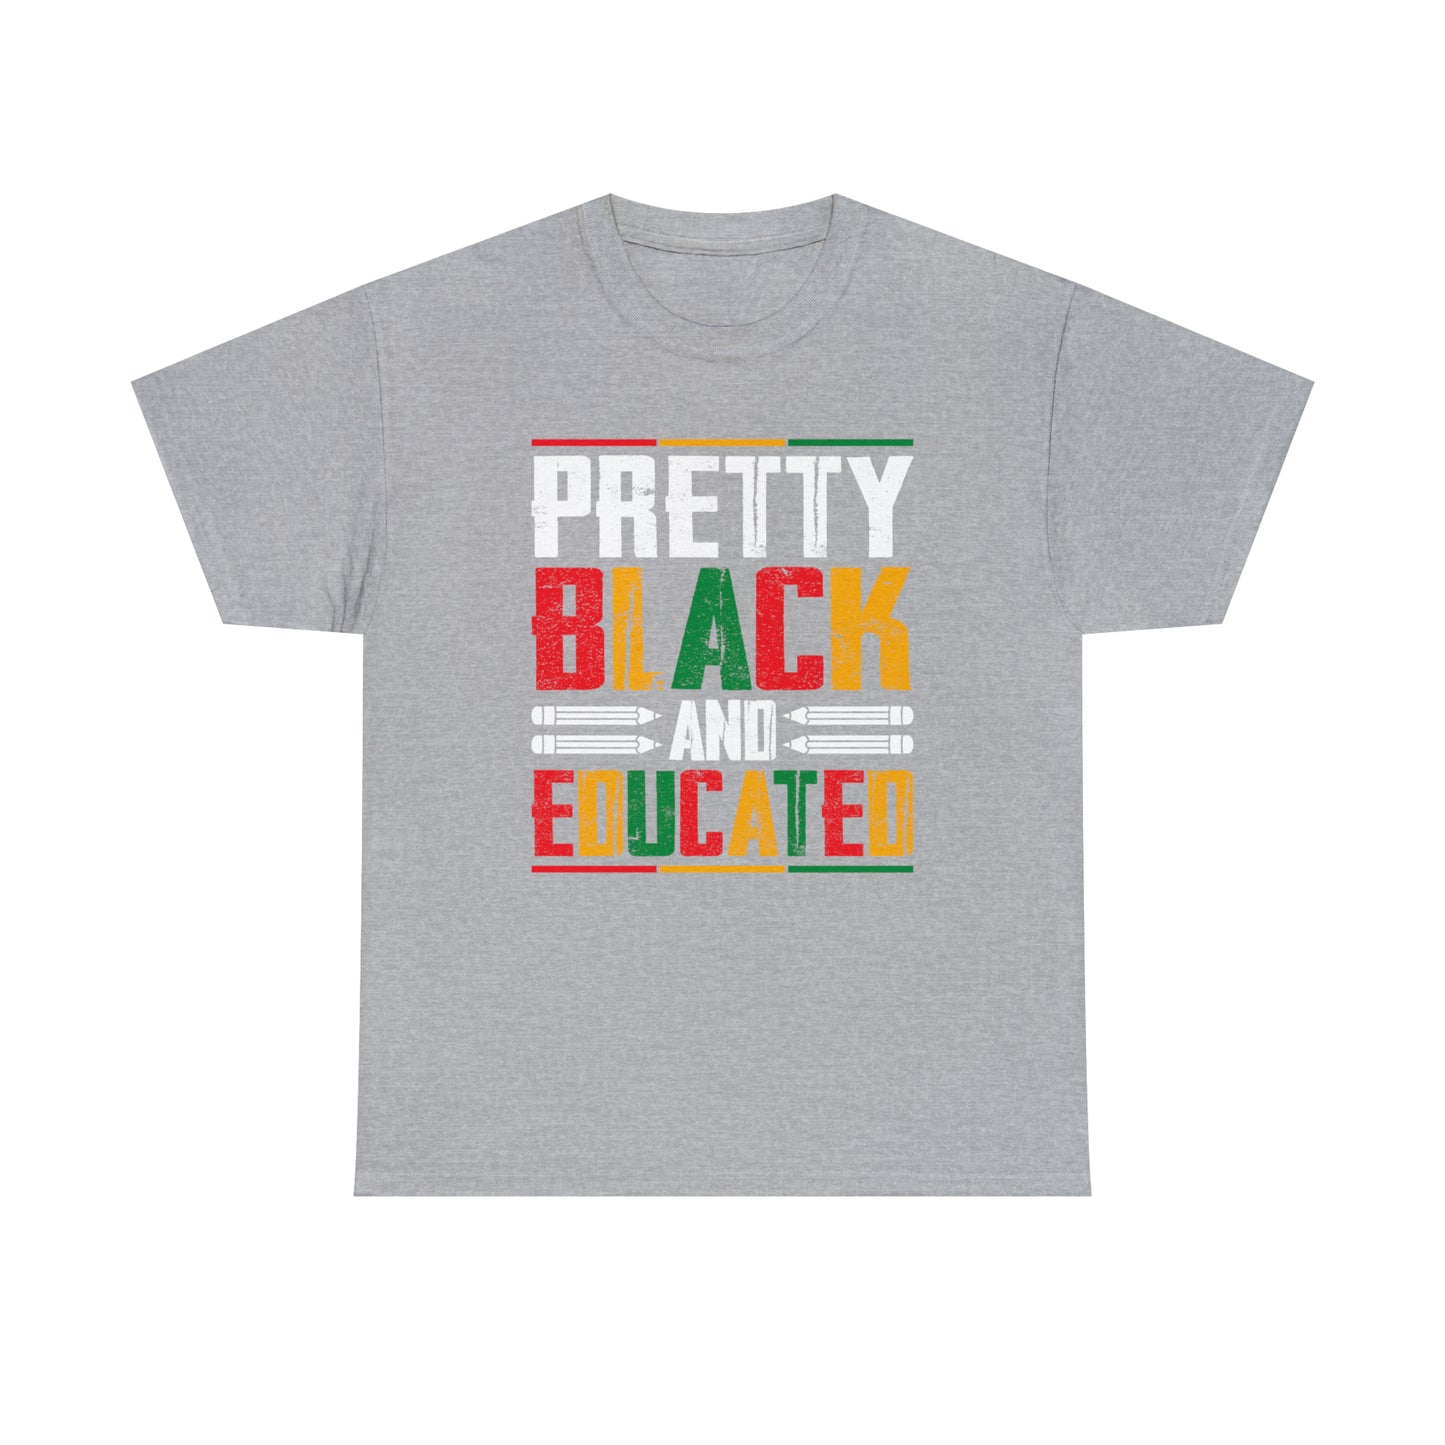 Pretty Black & Educated Shirt, Juneteenth T-Shirt, Black History Shirt